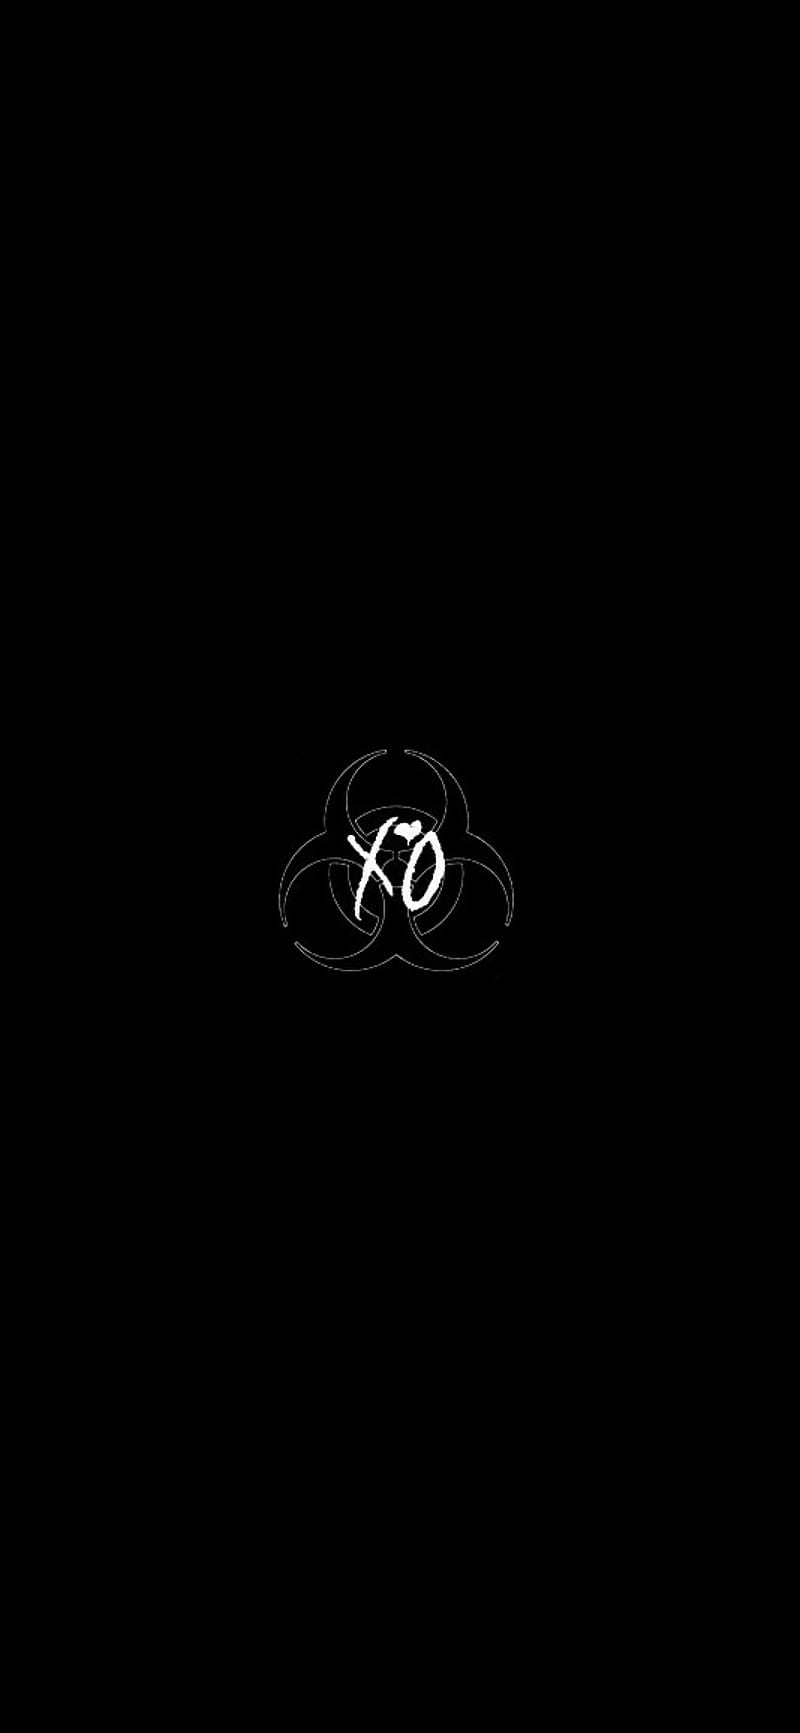 New XO logo wallpaper  rTheWeeknd